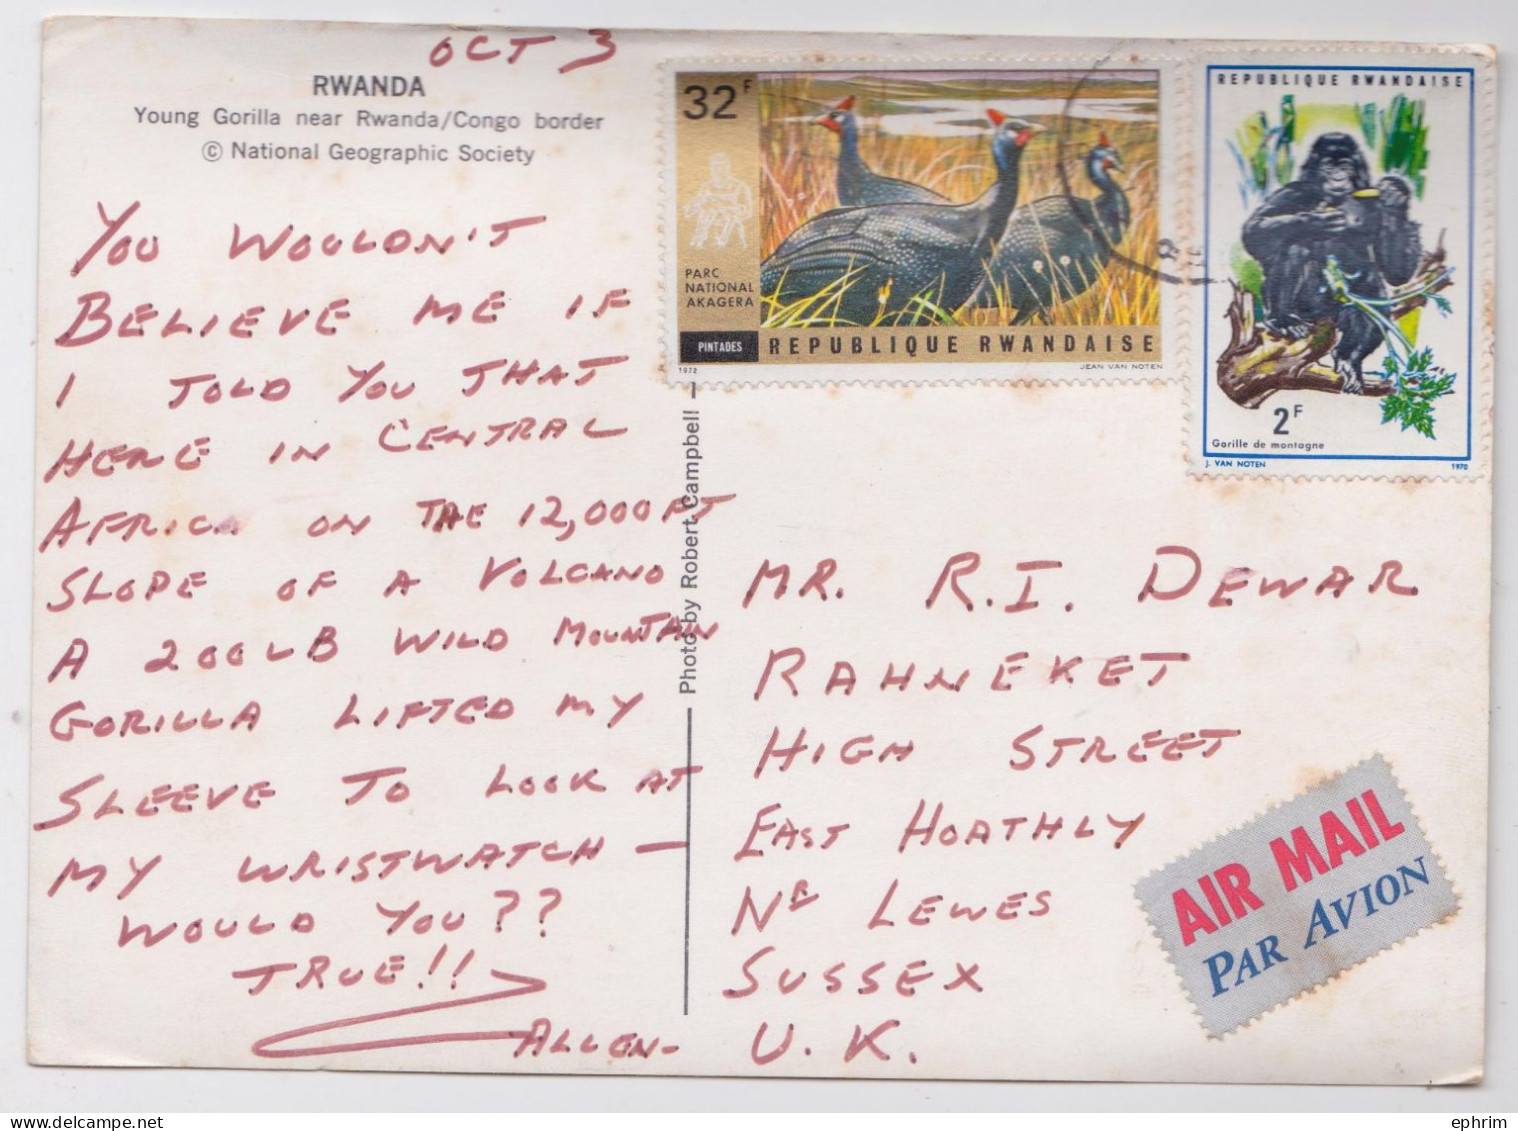 Rwanda Ruanda Carte Postale Timbre Parc National Gorille Gorilla Stamp 1970 Air Mail Postcard - Lettres & Documents